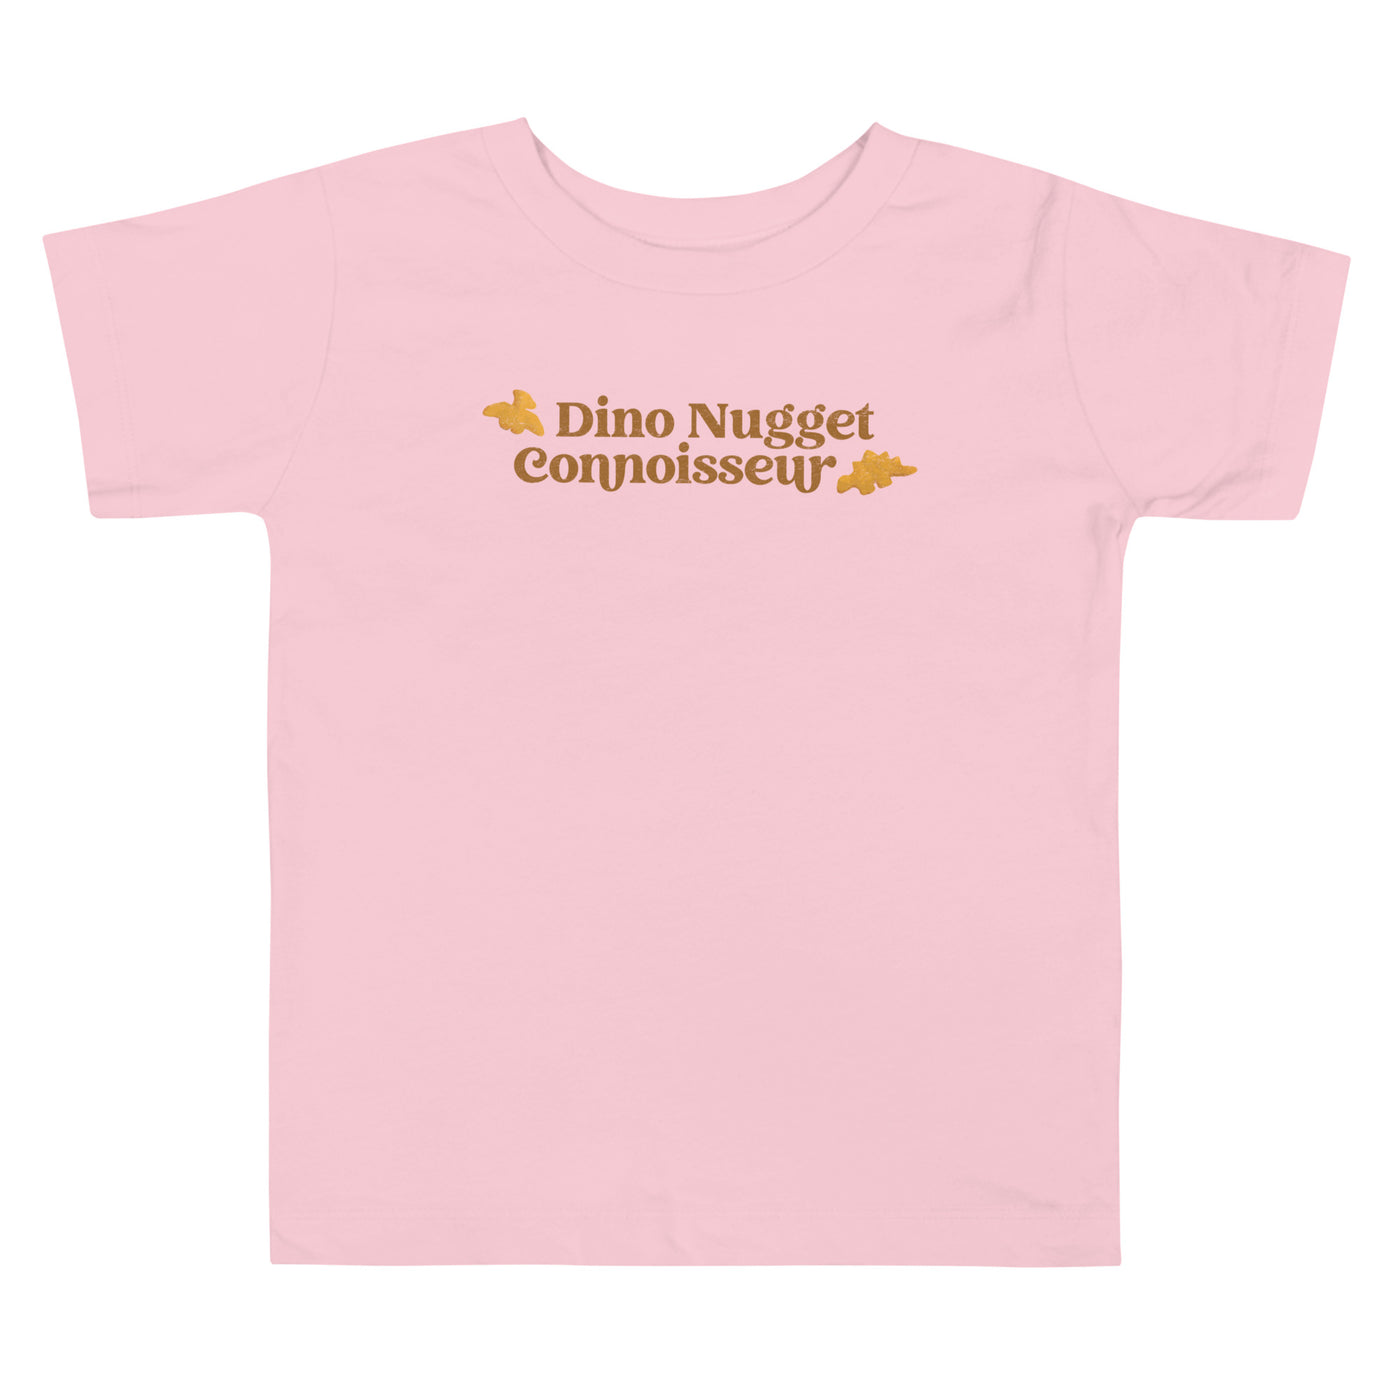 Kids 'Dino Nugget Connoisseur' T-Shirt